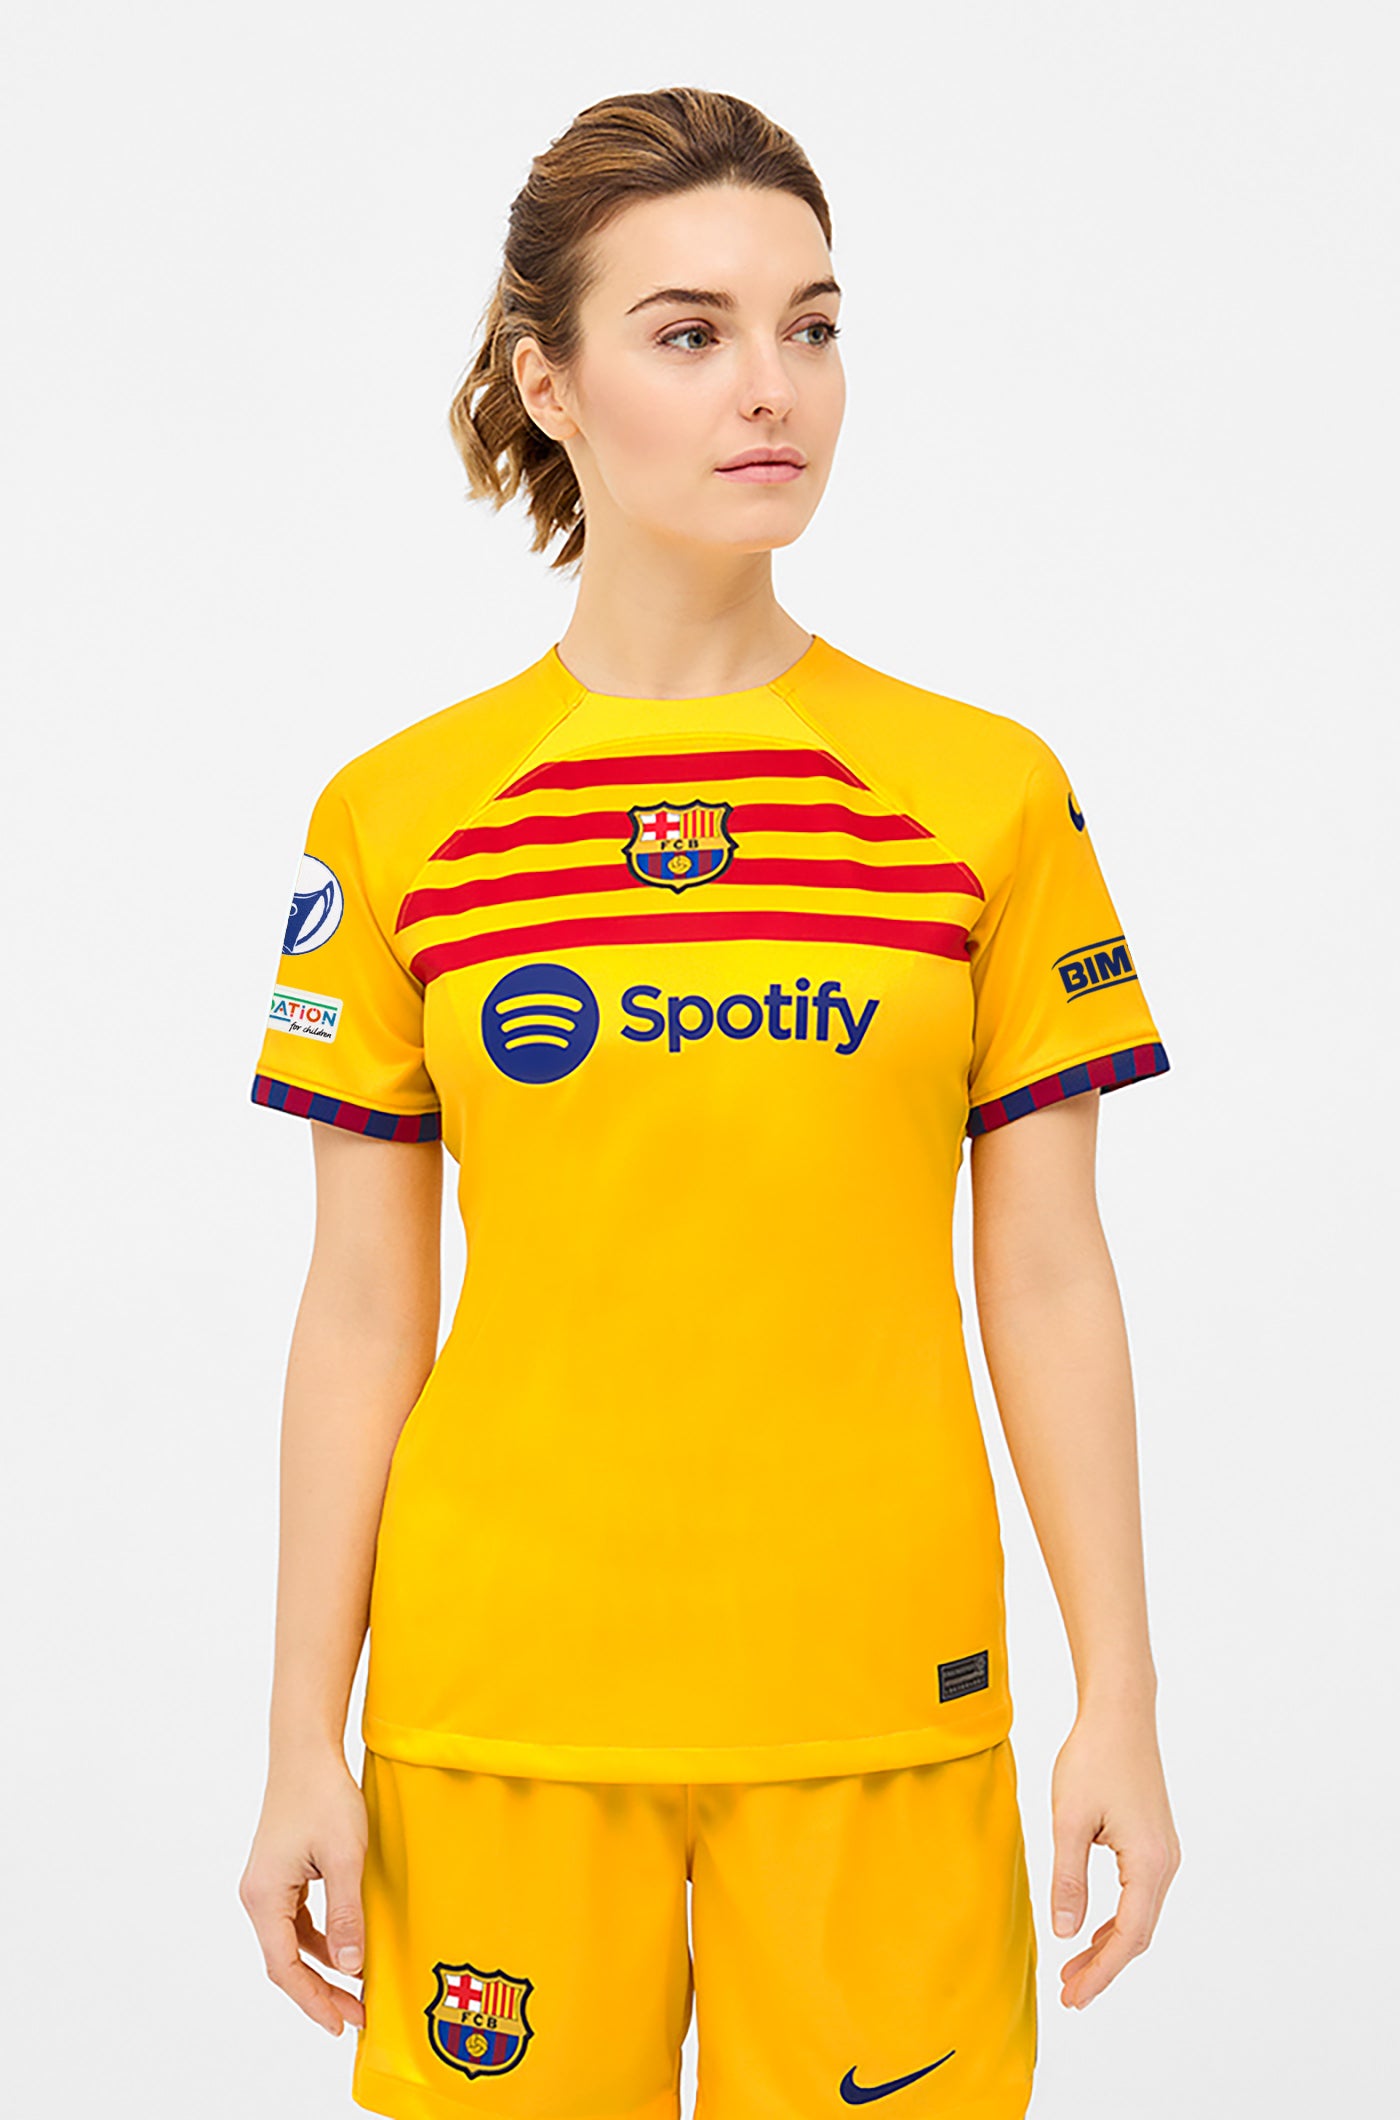 UWCL FC Barcelona fourth shirt 23/24 - Women  - PARALLUELO